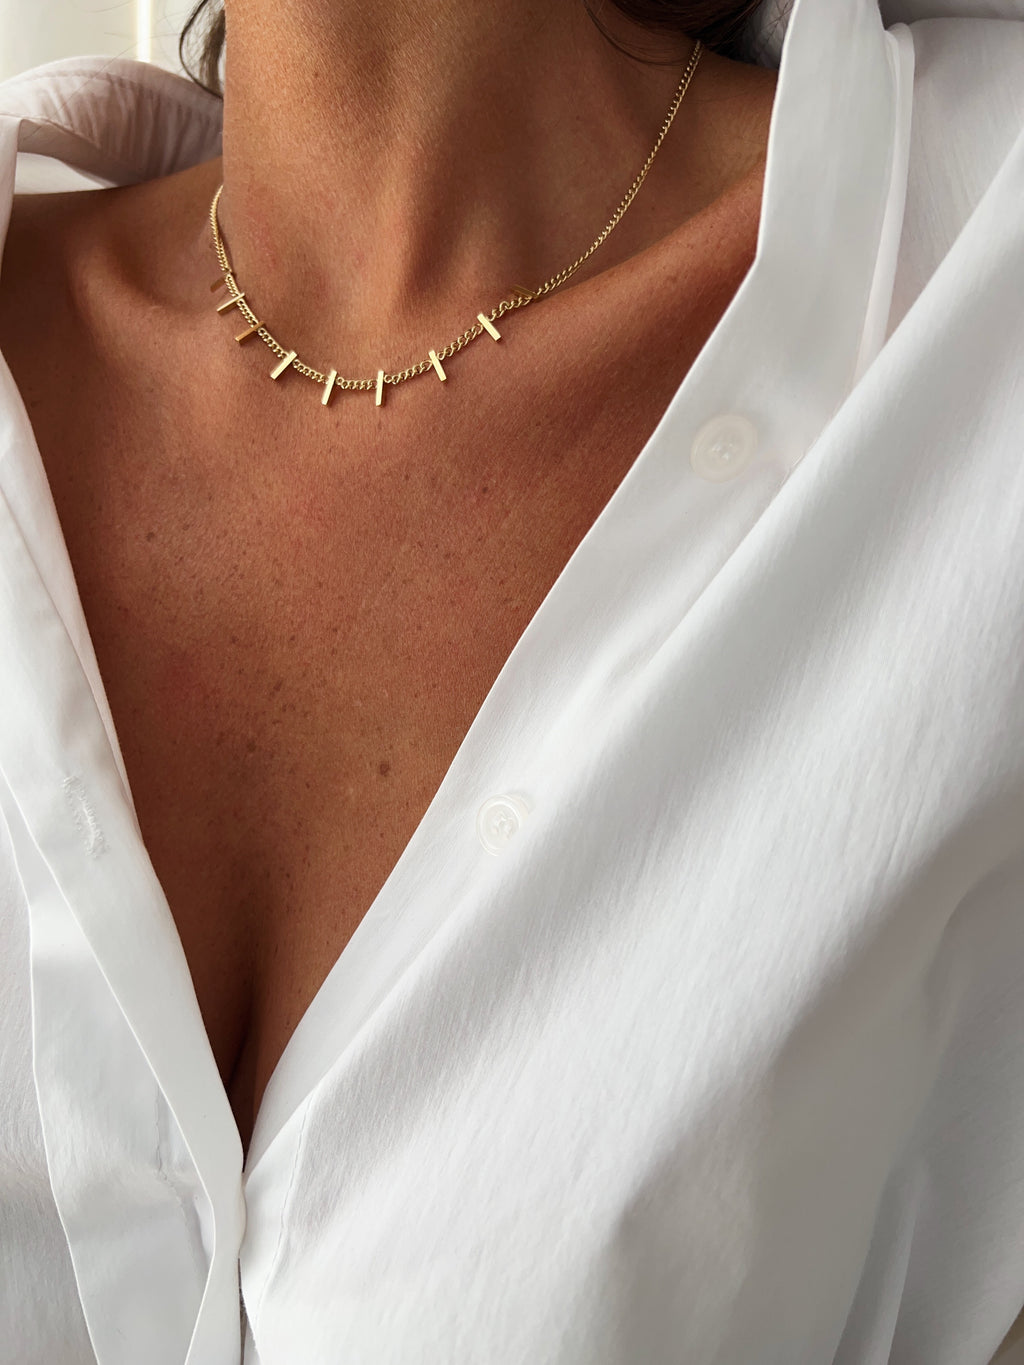 Medy necklace - Golden